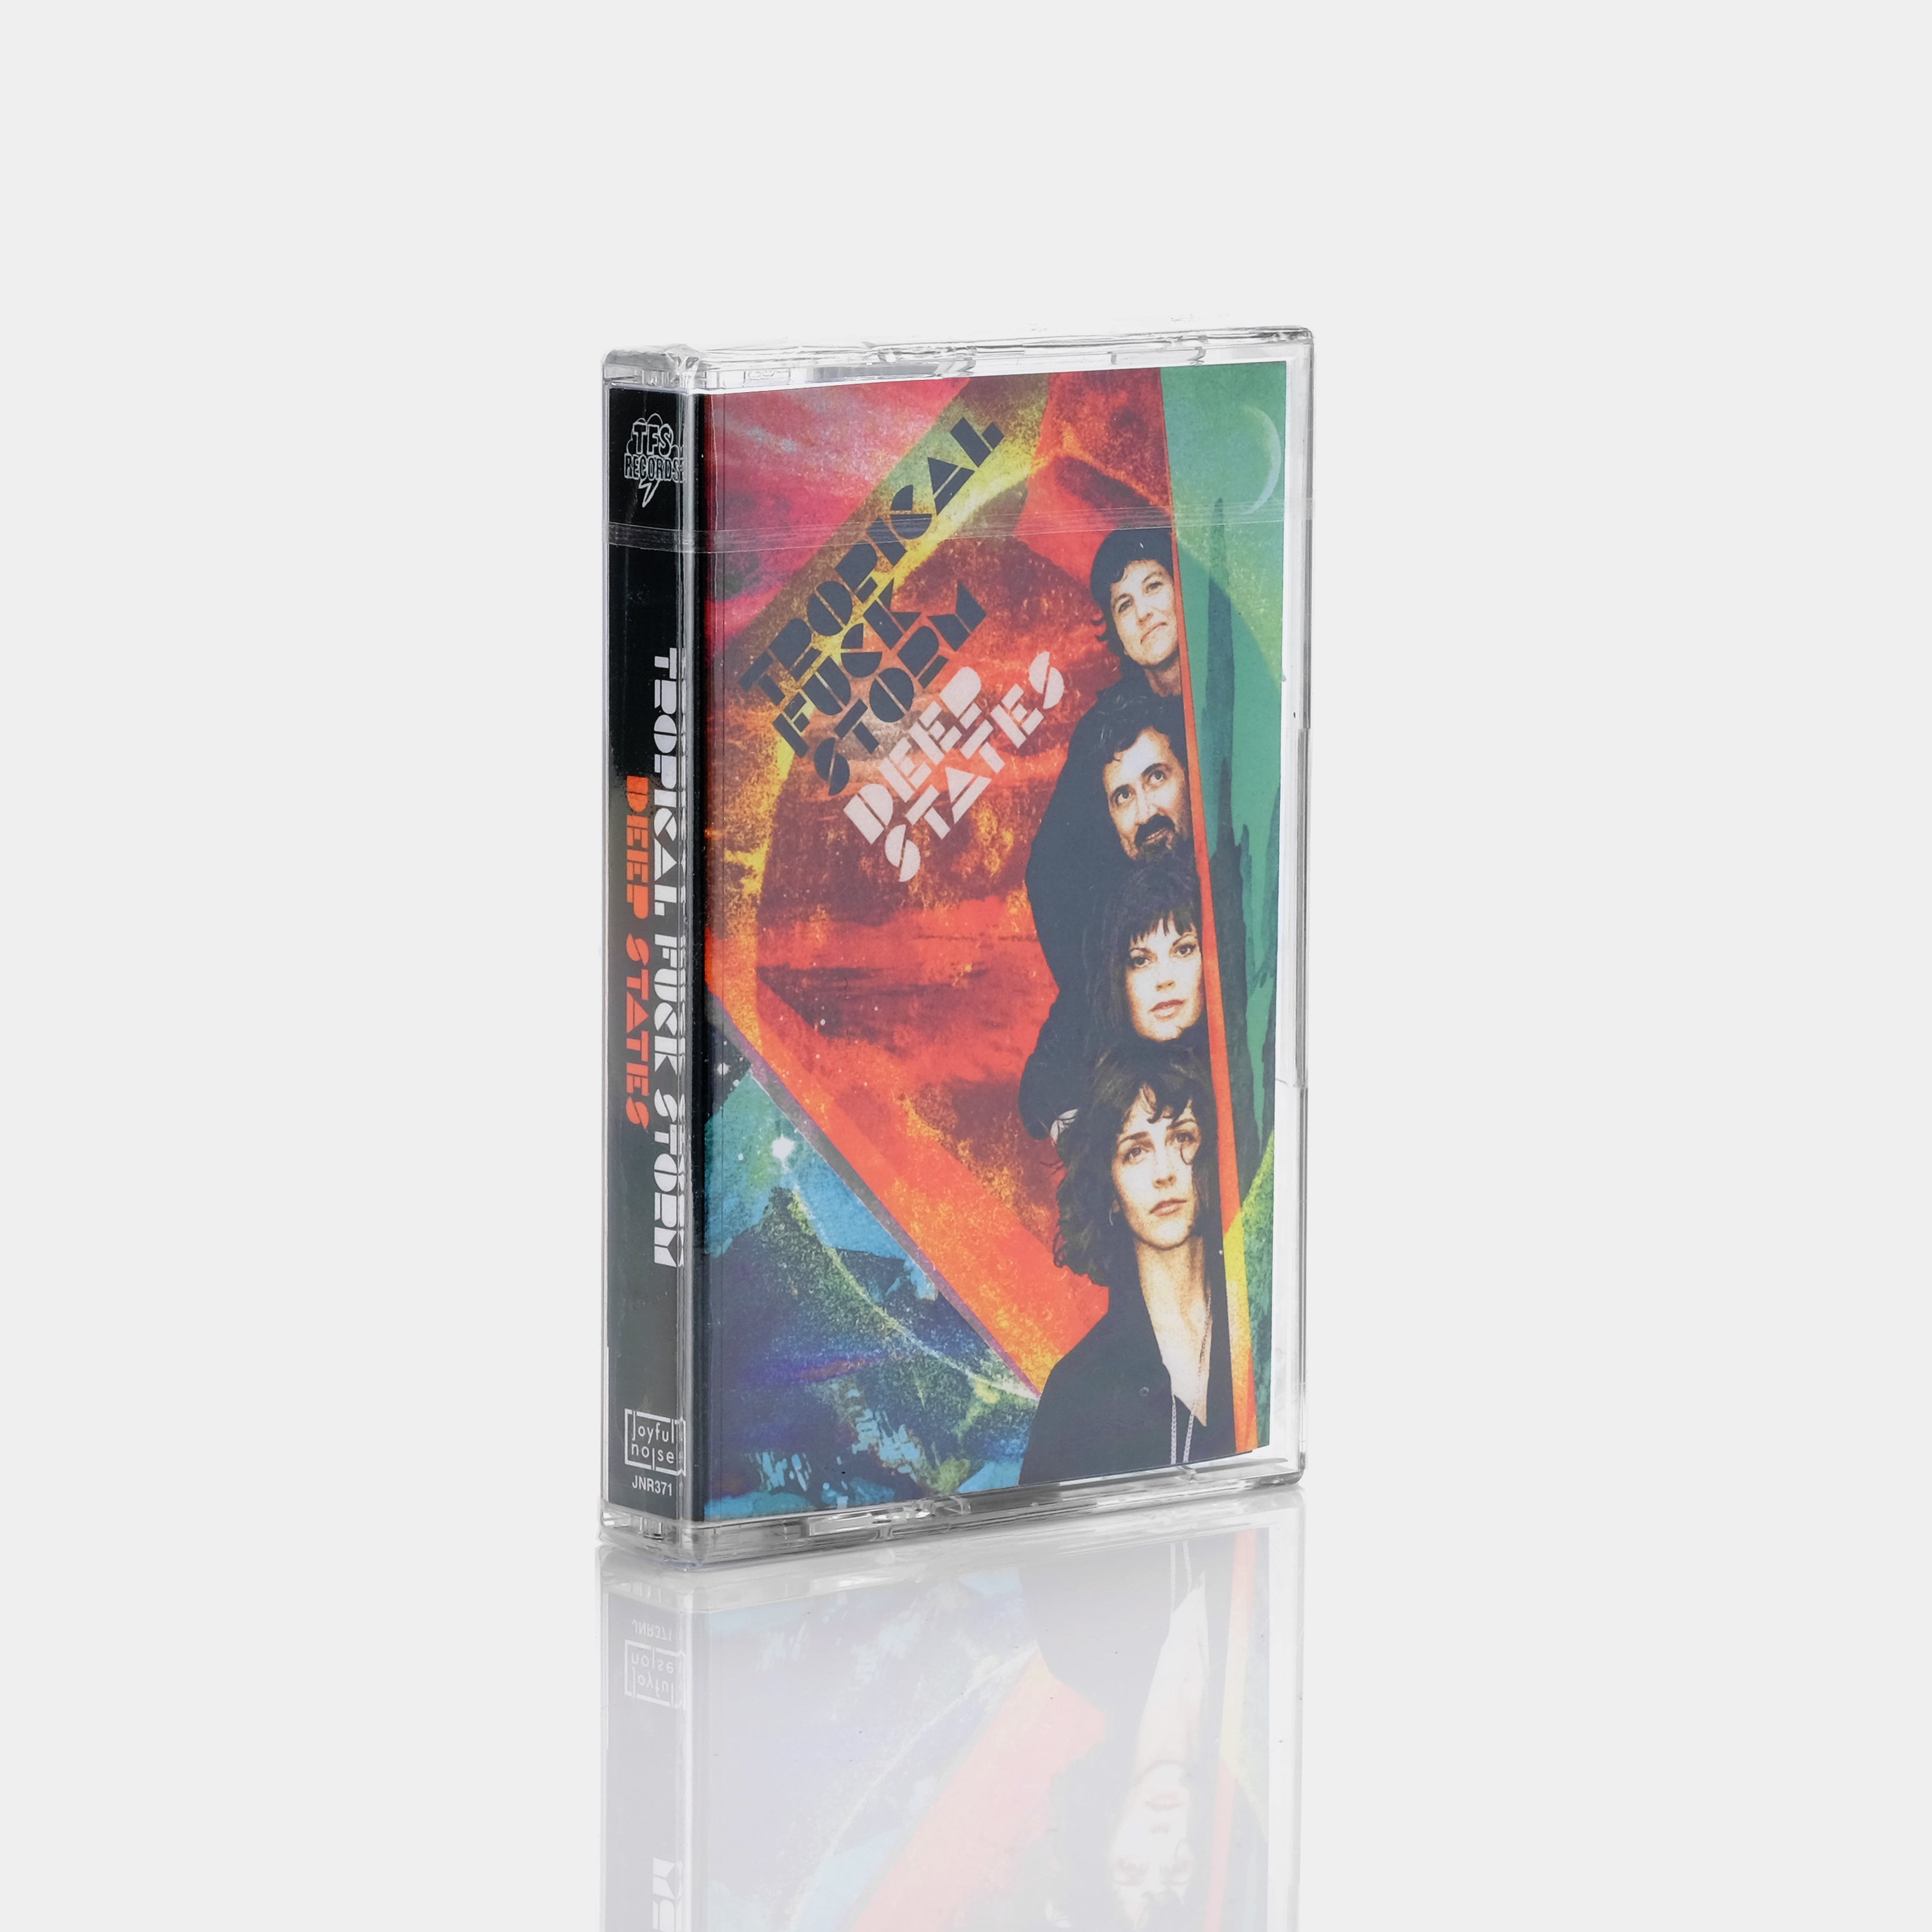 Tropical Fuck Storm - Deep States Cassette Tape